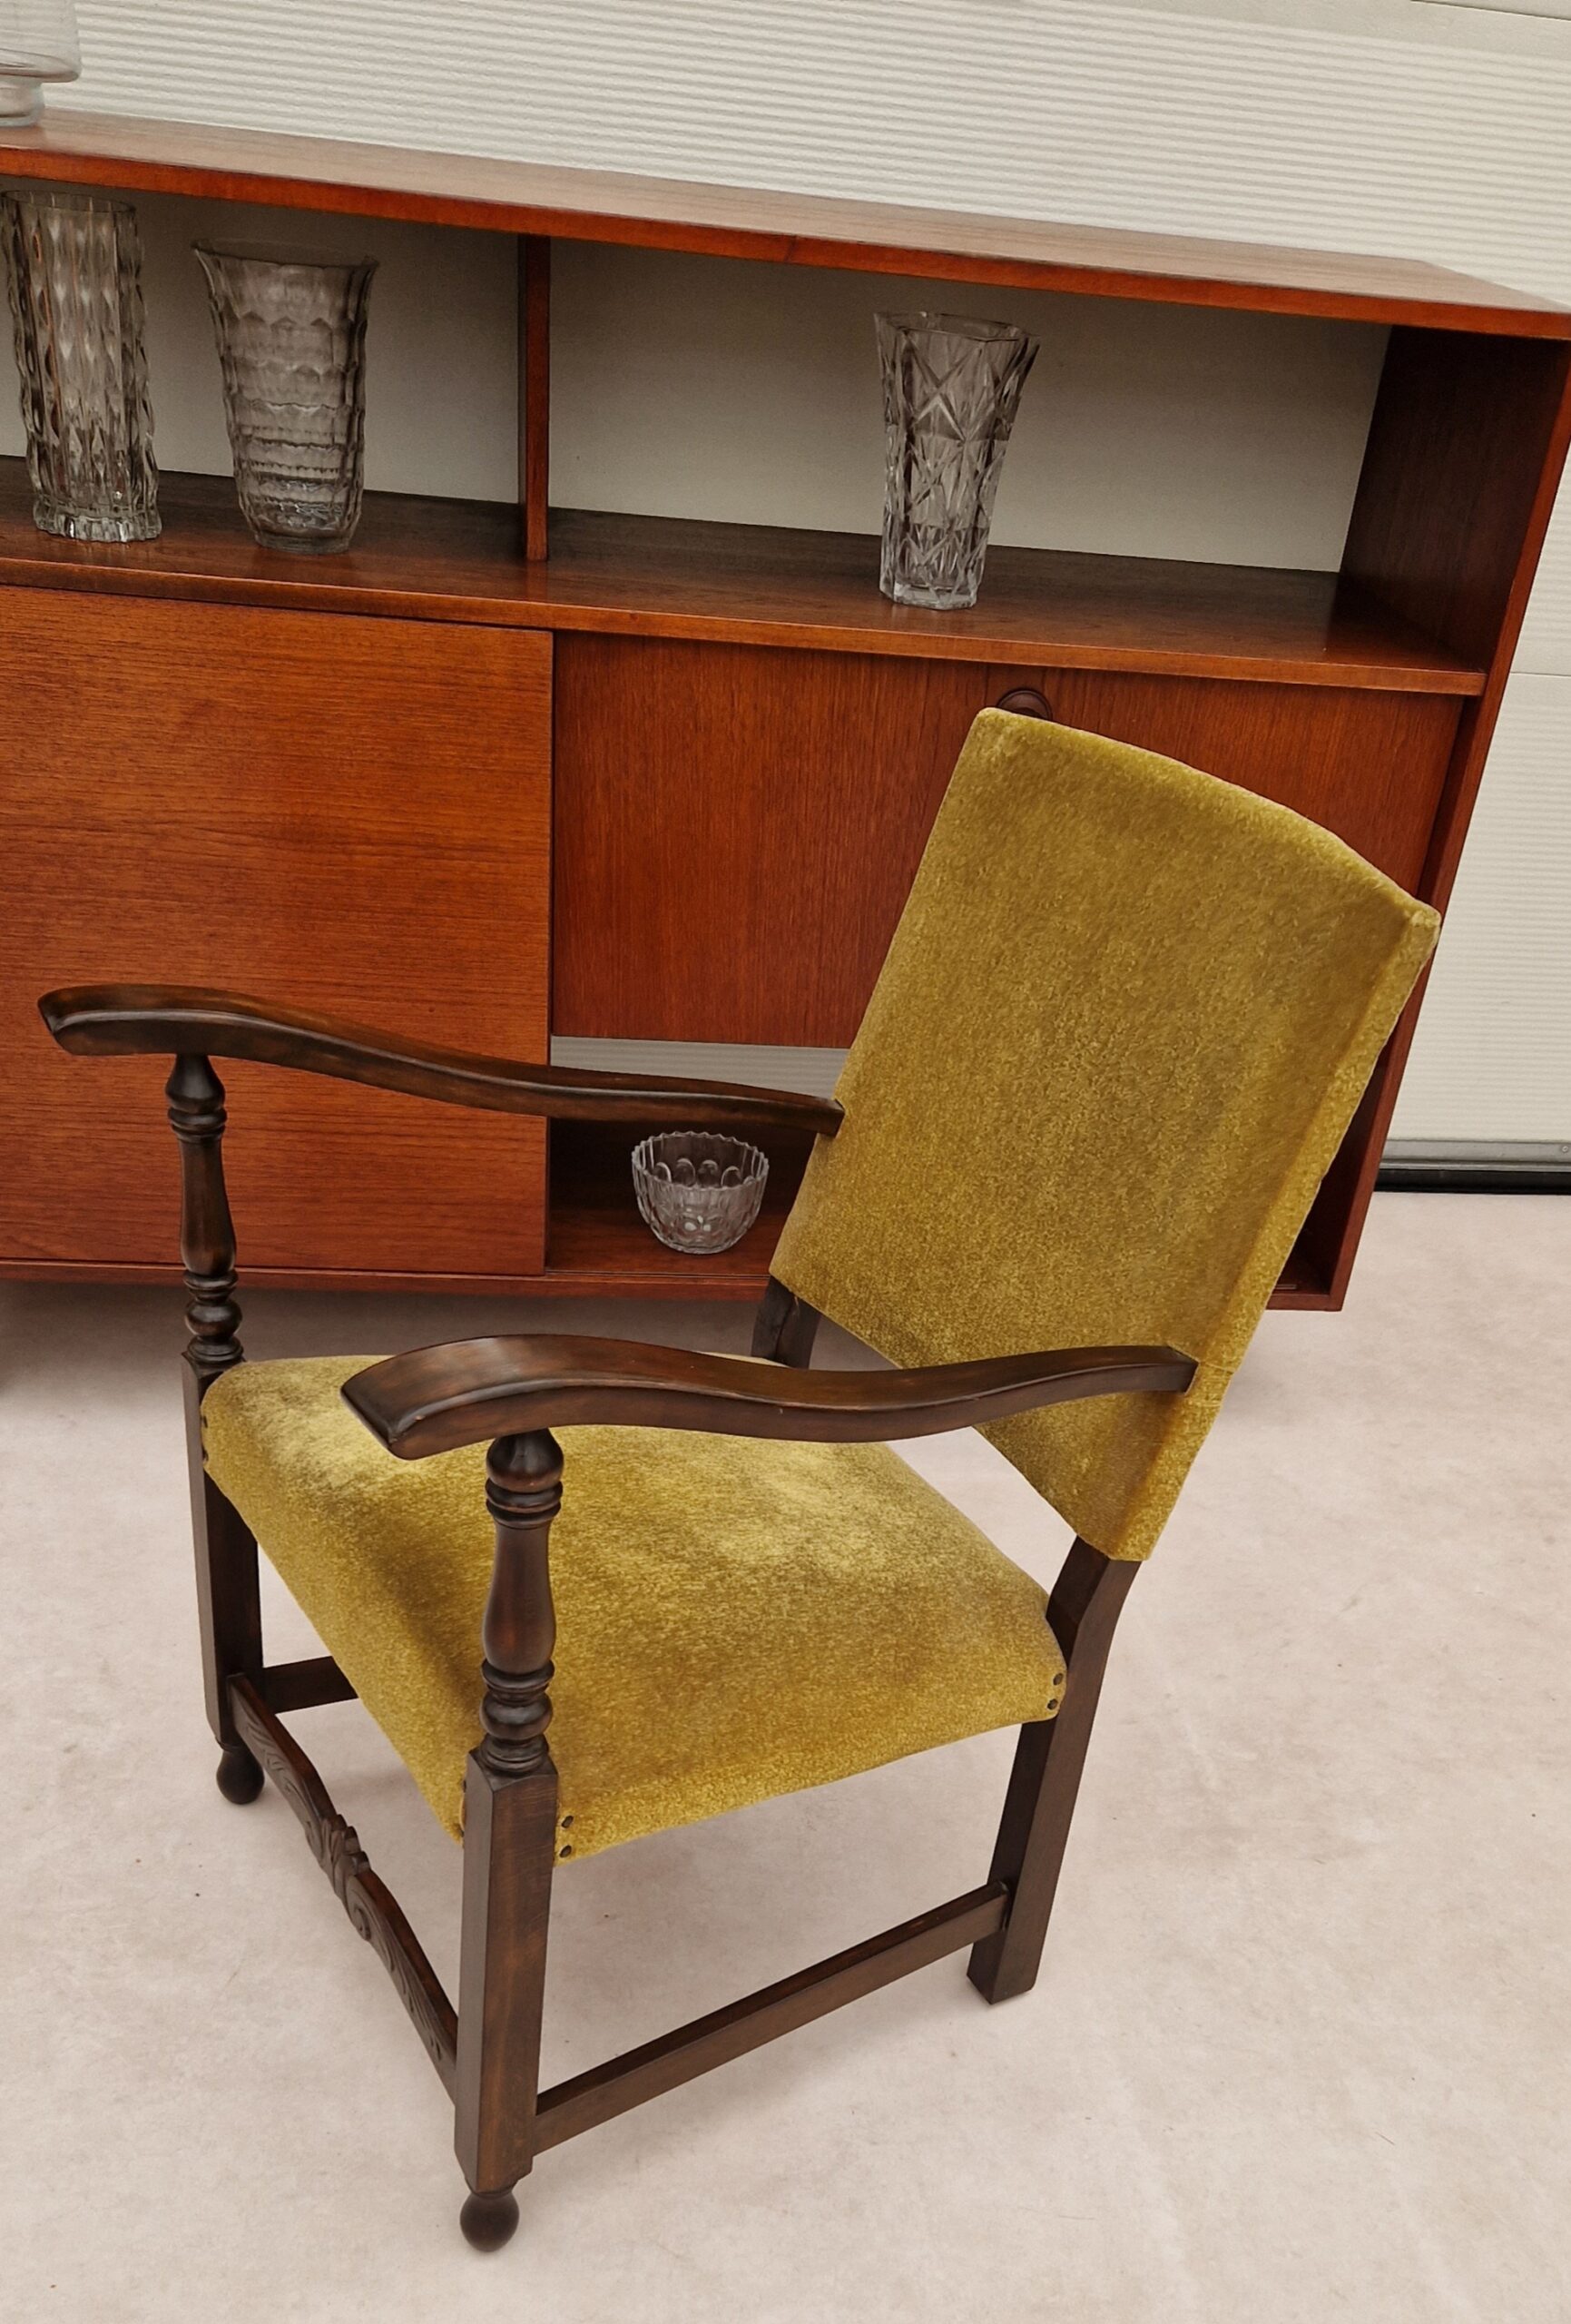 Houten fauteuil met okergele bekleding - DasGaaf vintage